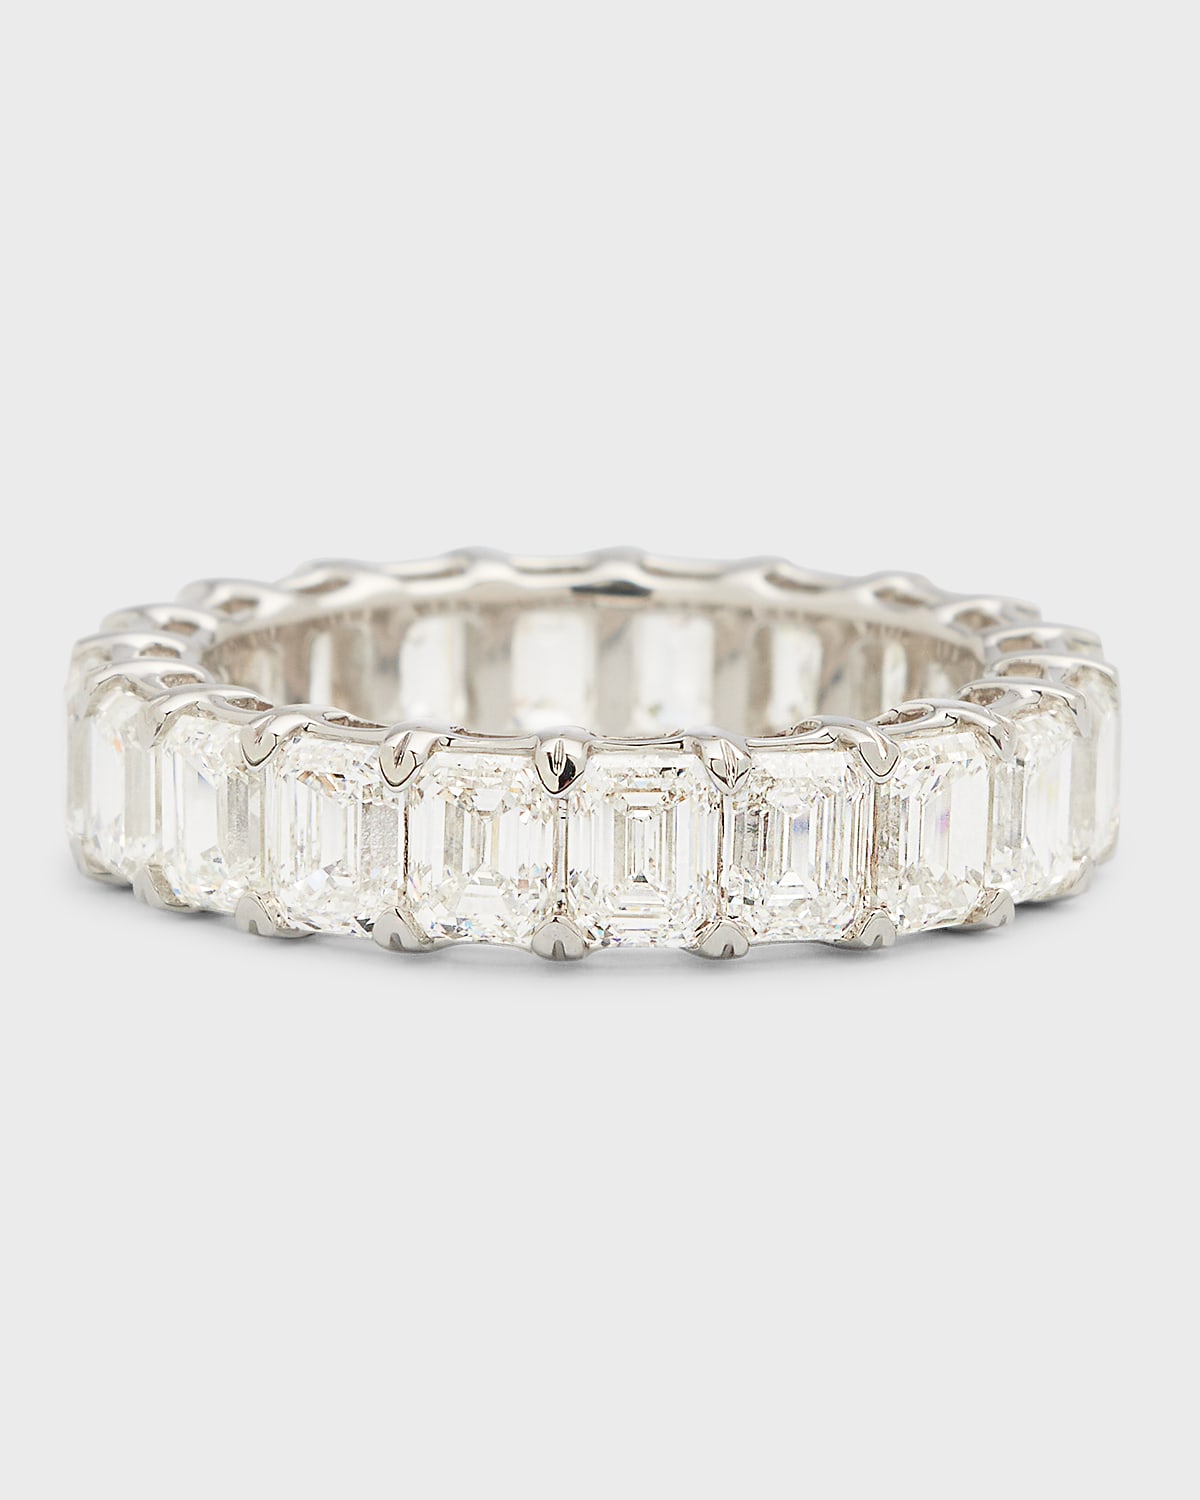 18K White Gold Emerald-Cut Diamond Eternity Band Ring, Size 6, 6.0tcw